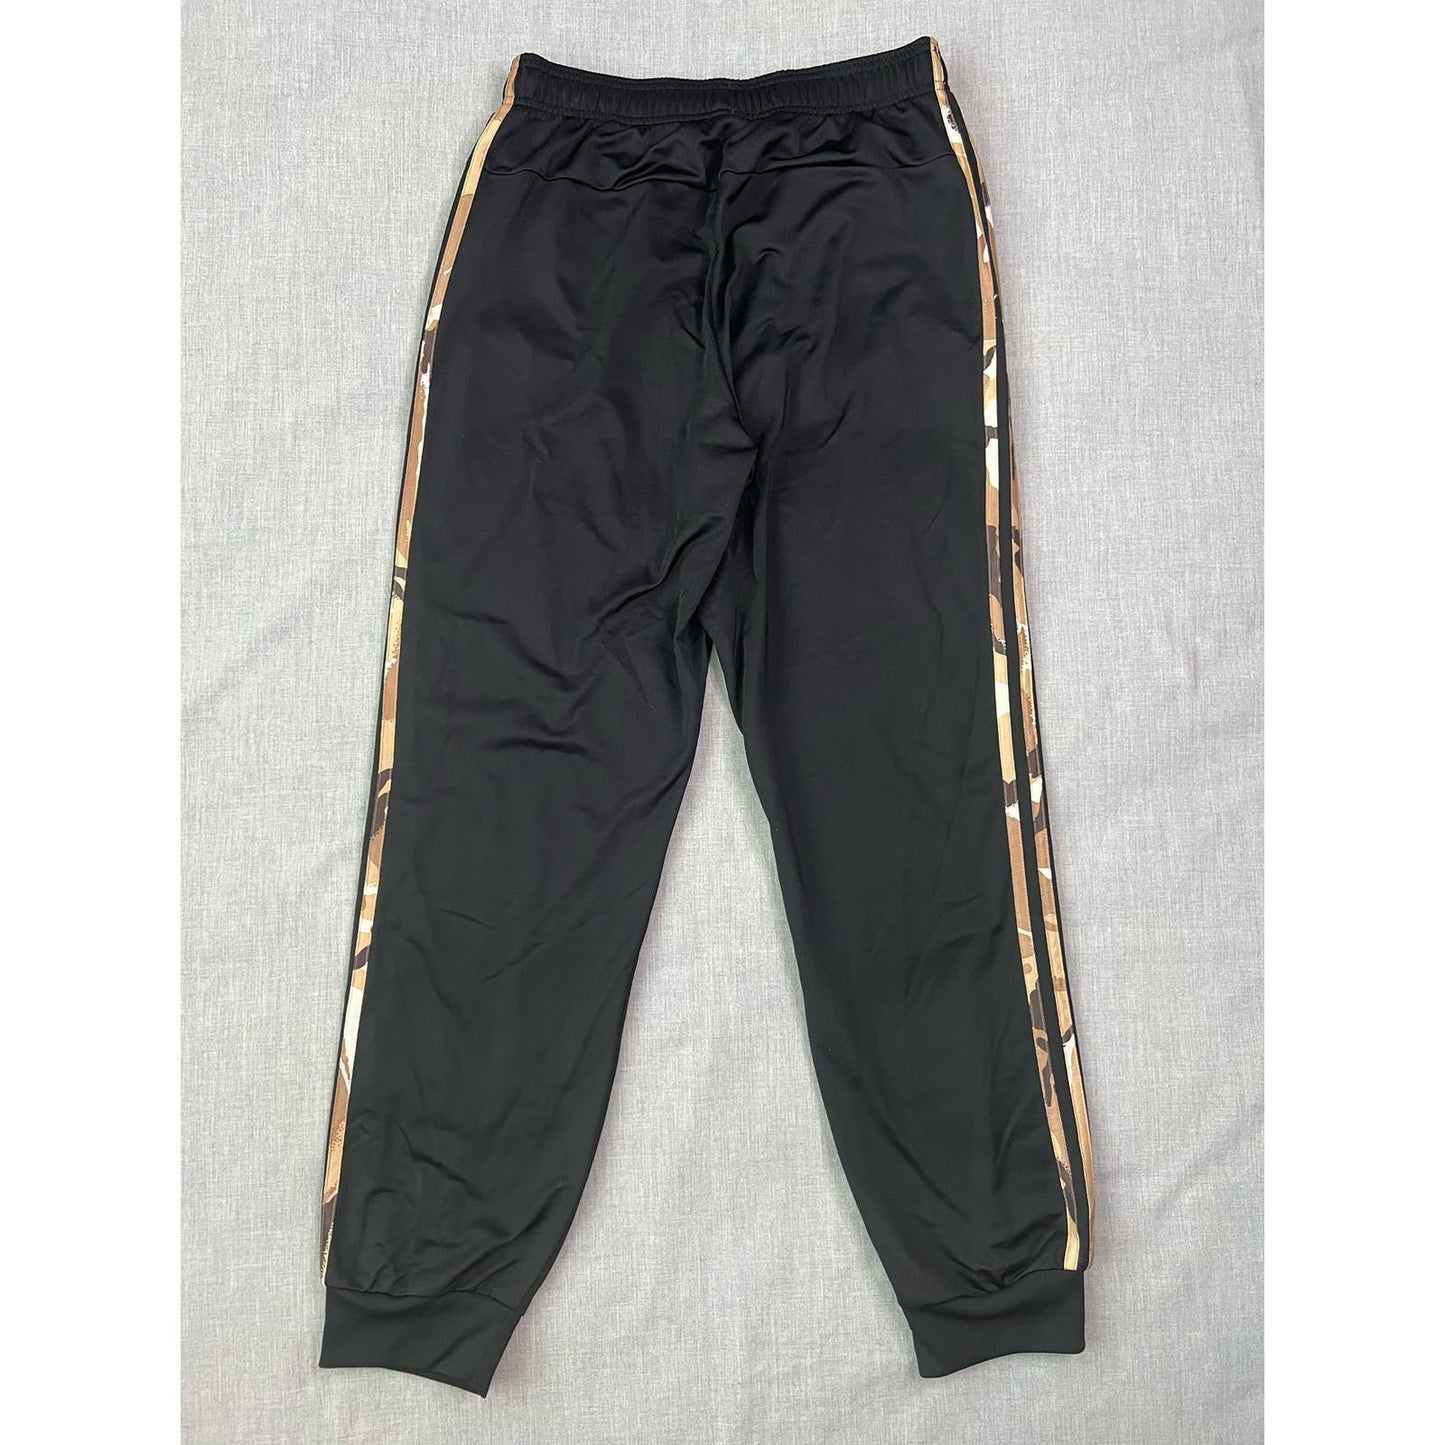 Adidas Desert Camo Stripe Athletic Warmup Pants Medium